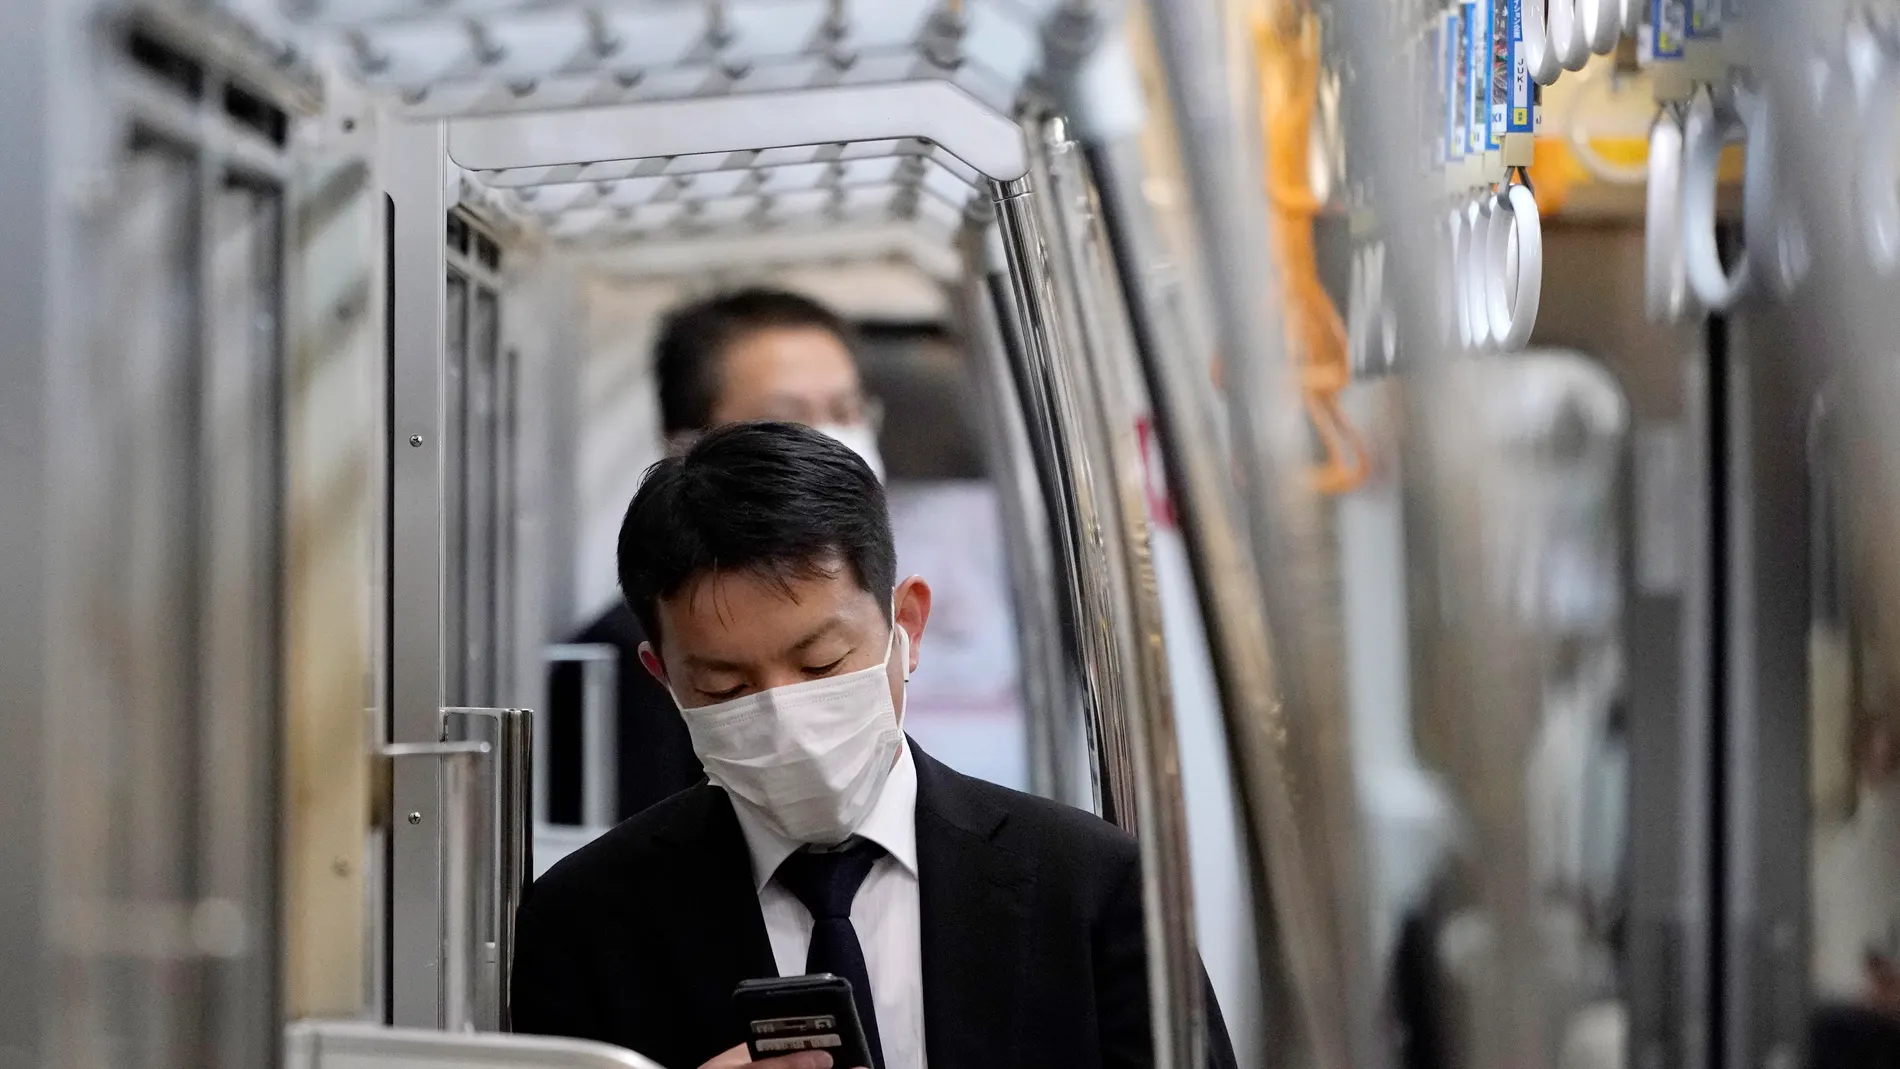 Daily life amid coronavirus pandemic, in Japan